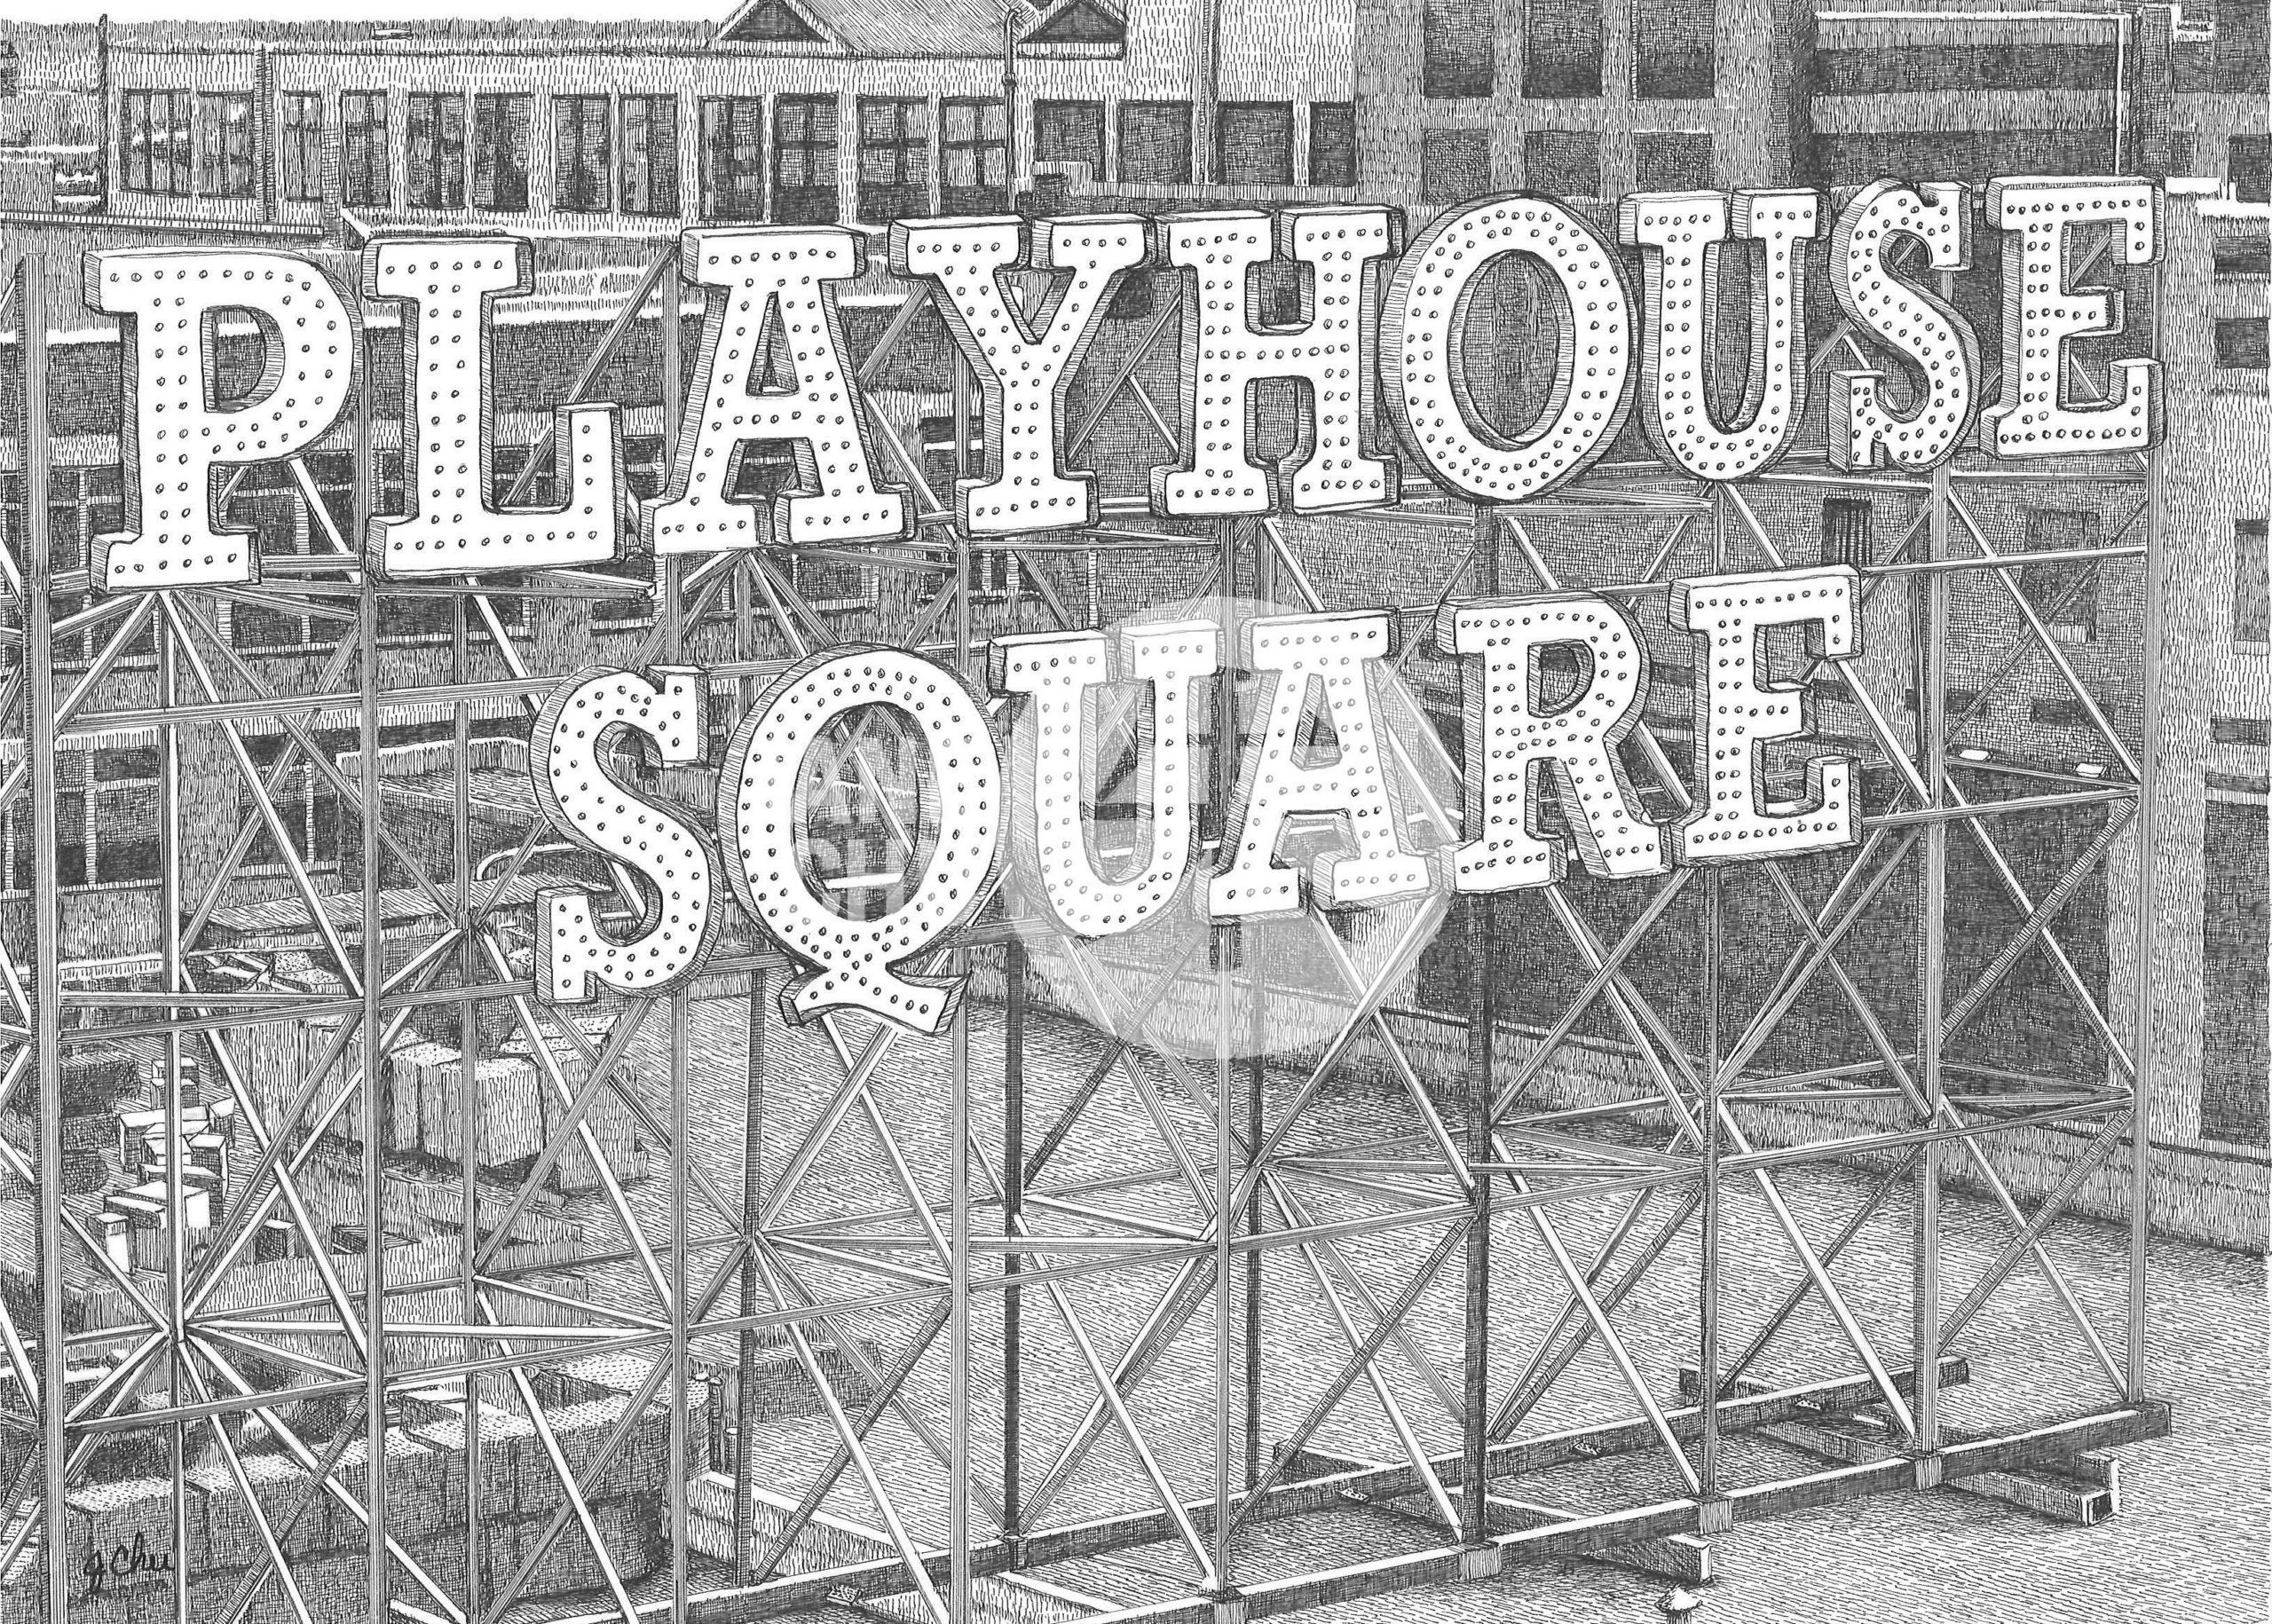 Playhouse Square by Jane Chu